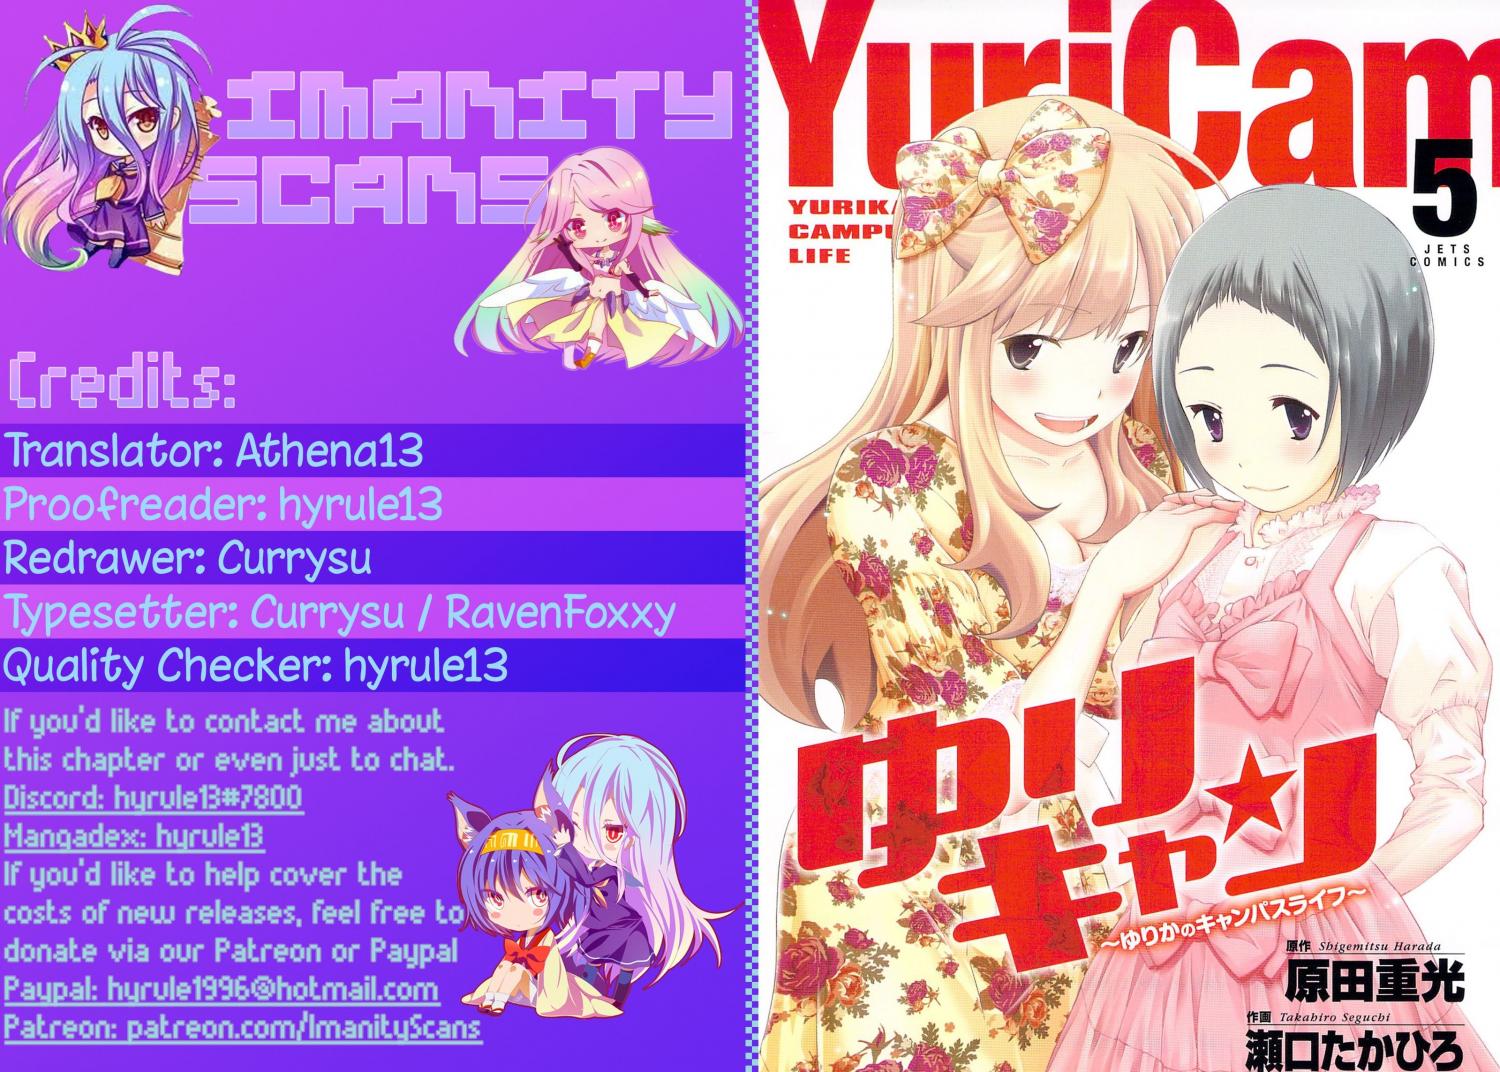 Yuricam - Yurika no Campus Life - episode 44 - 0